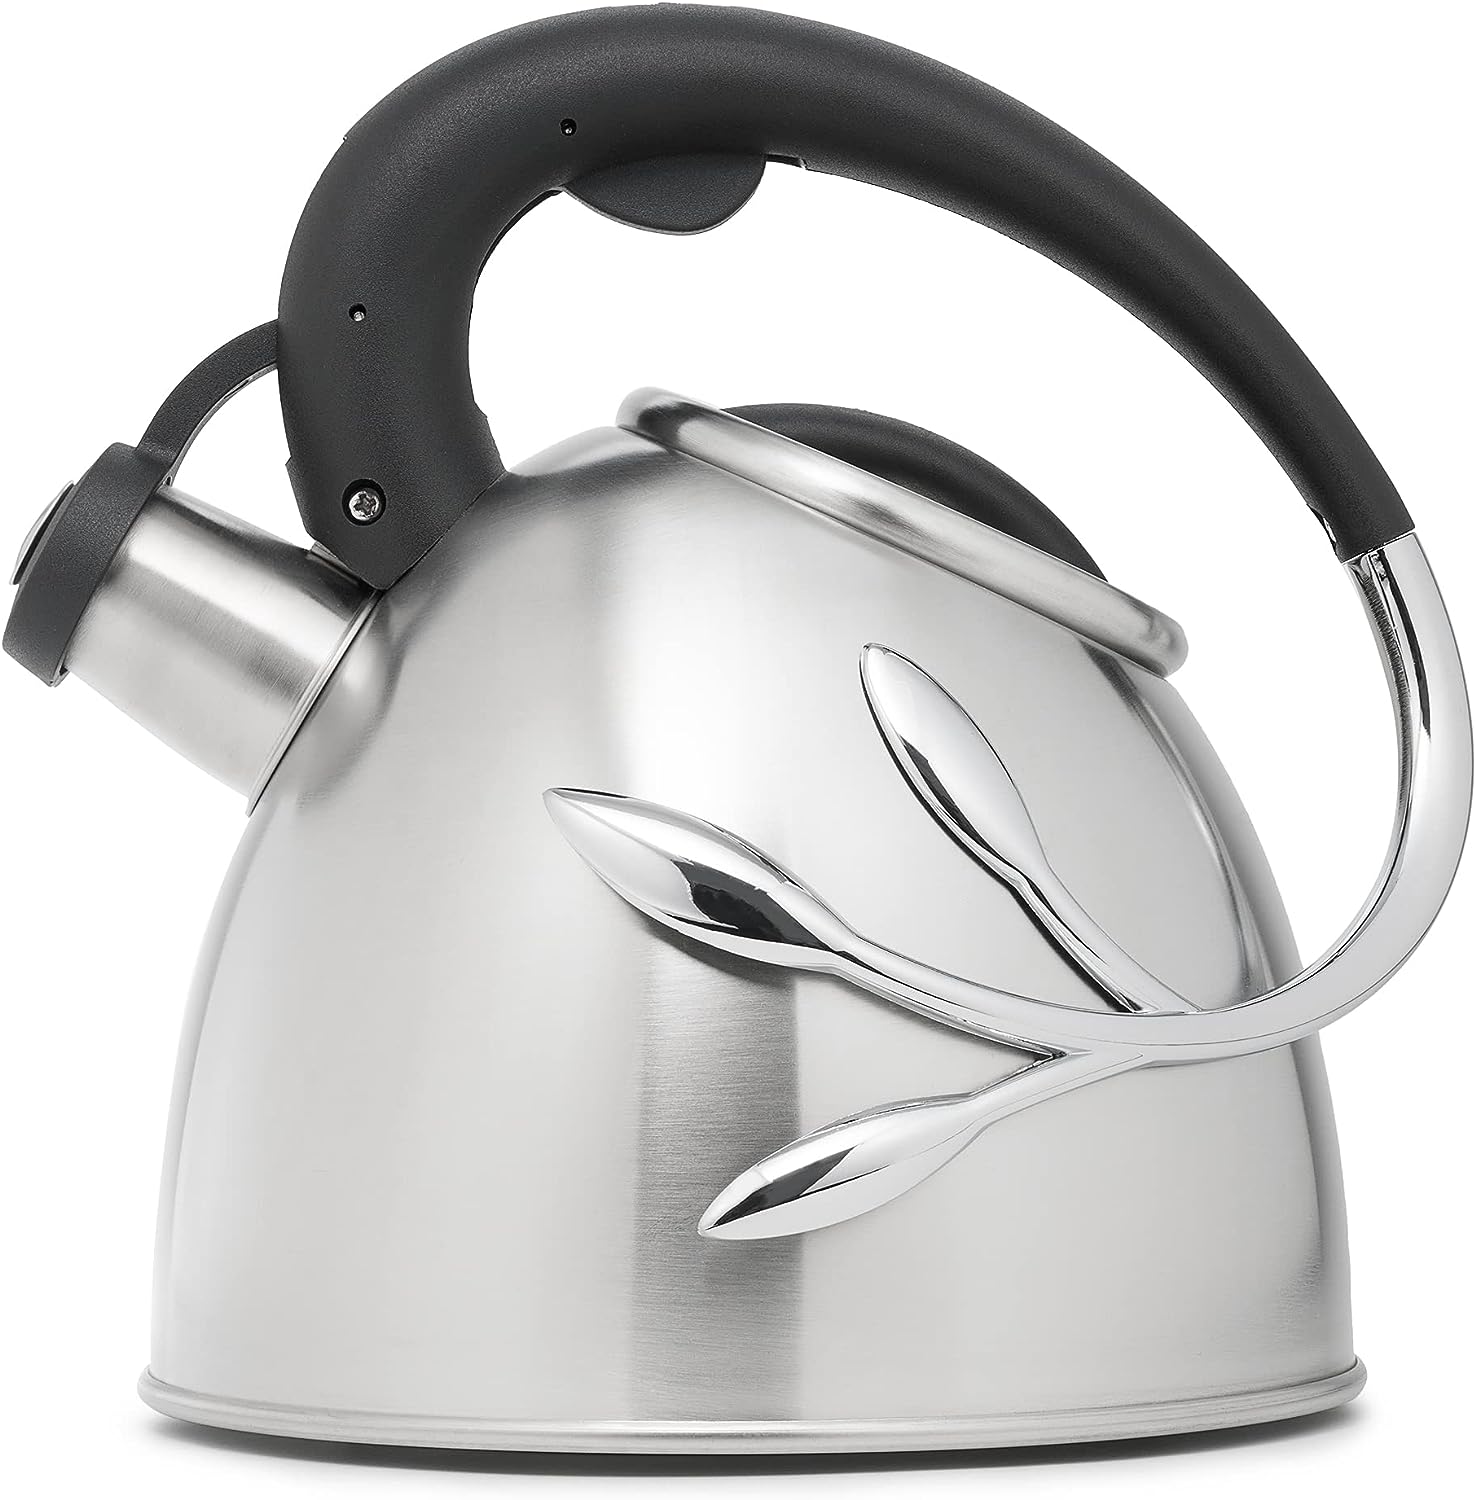 best tea kettle ever